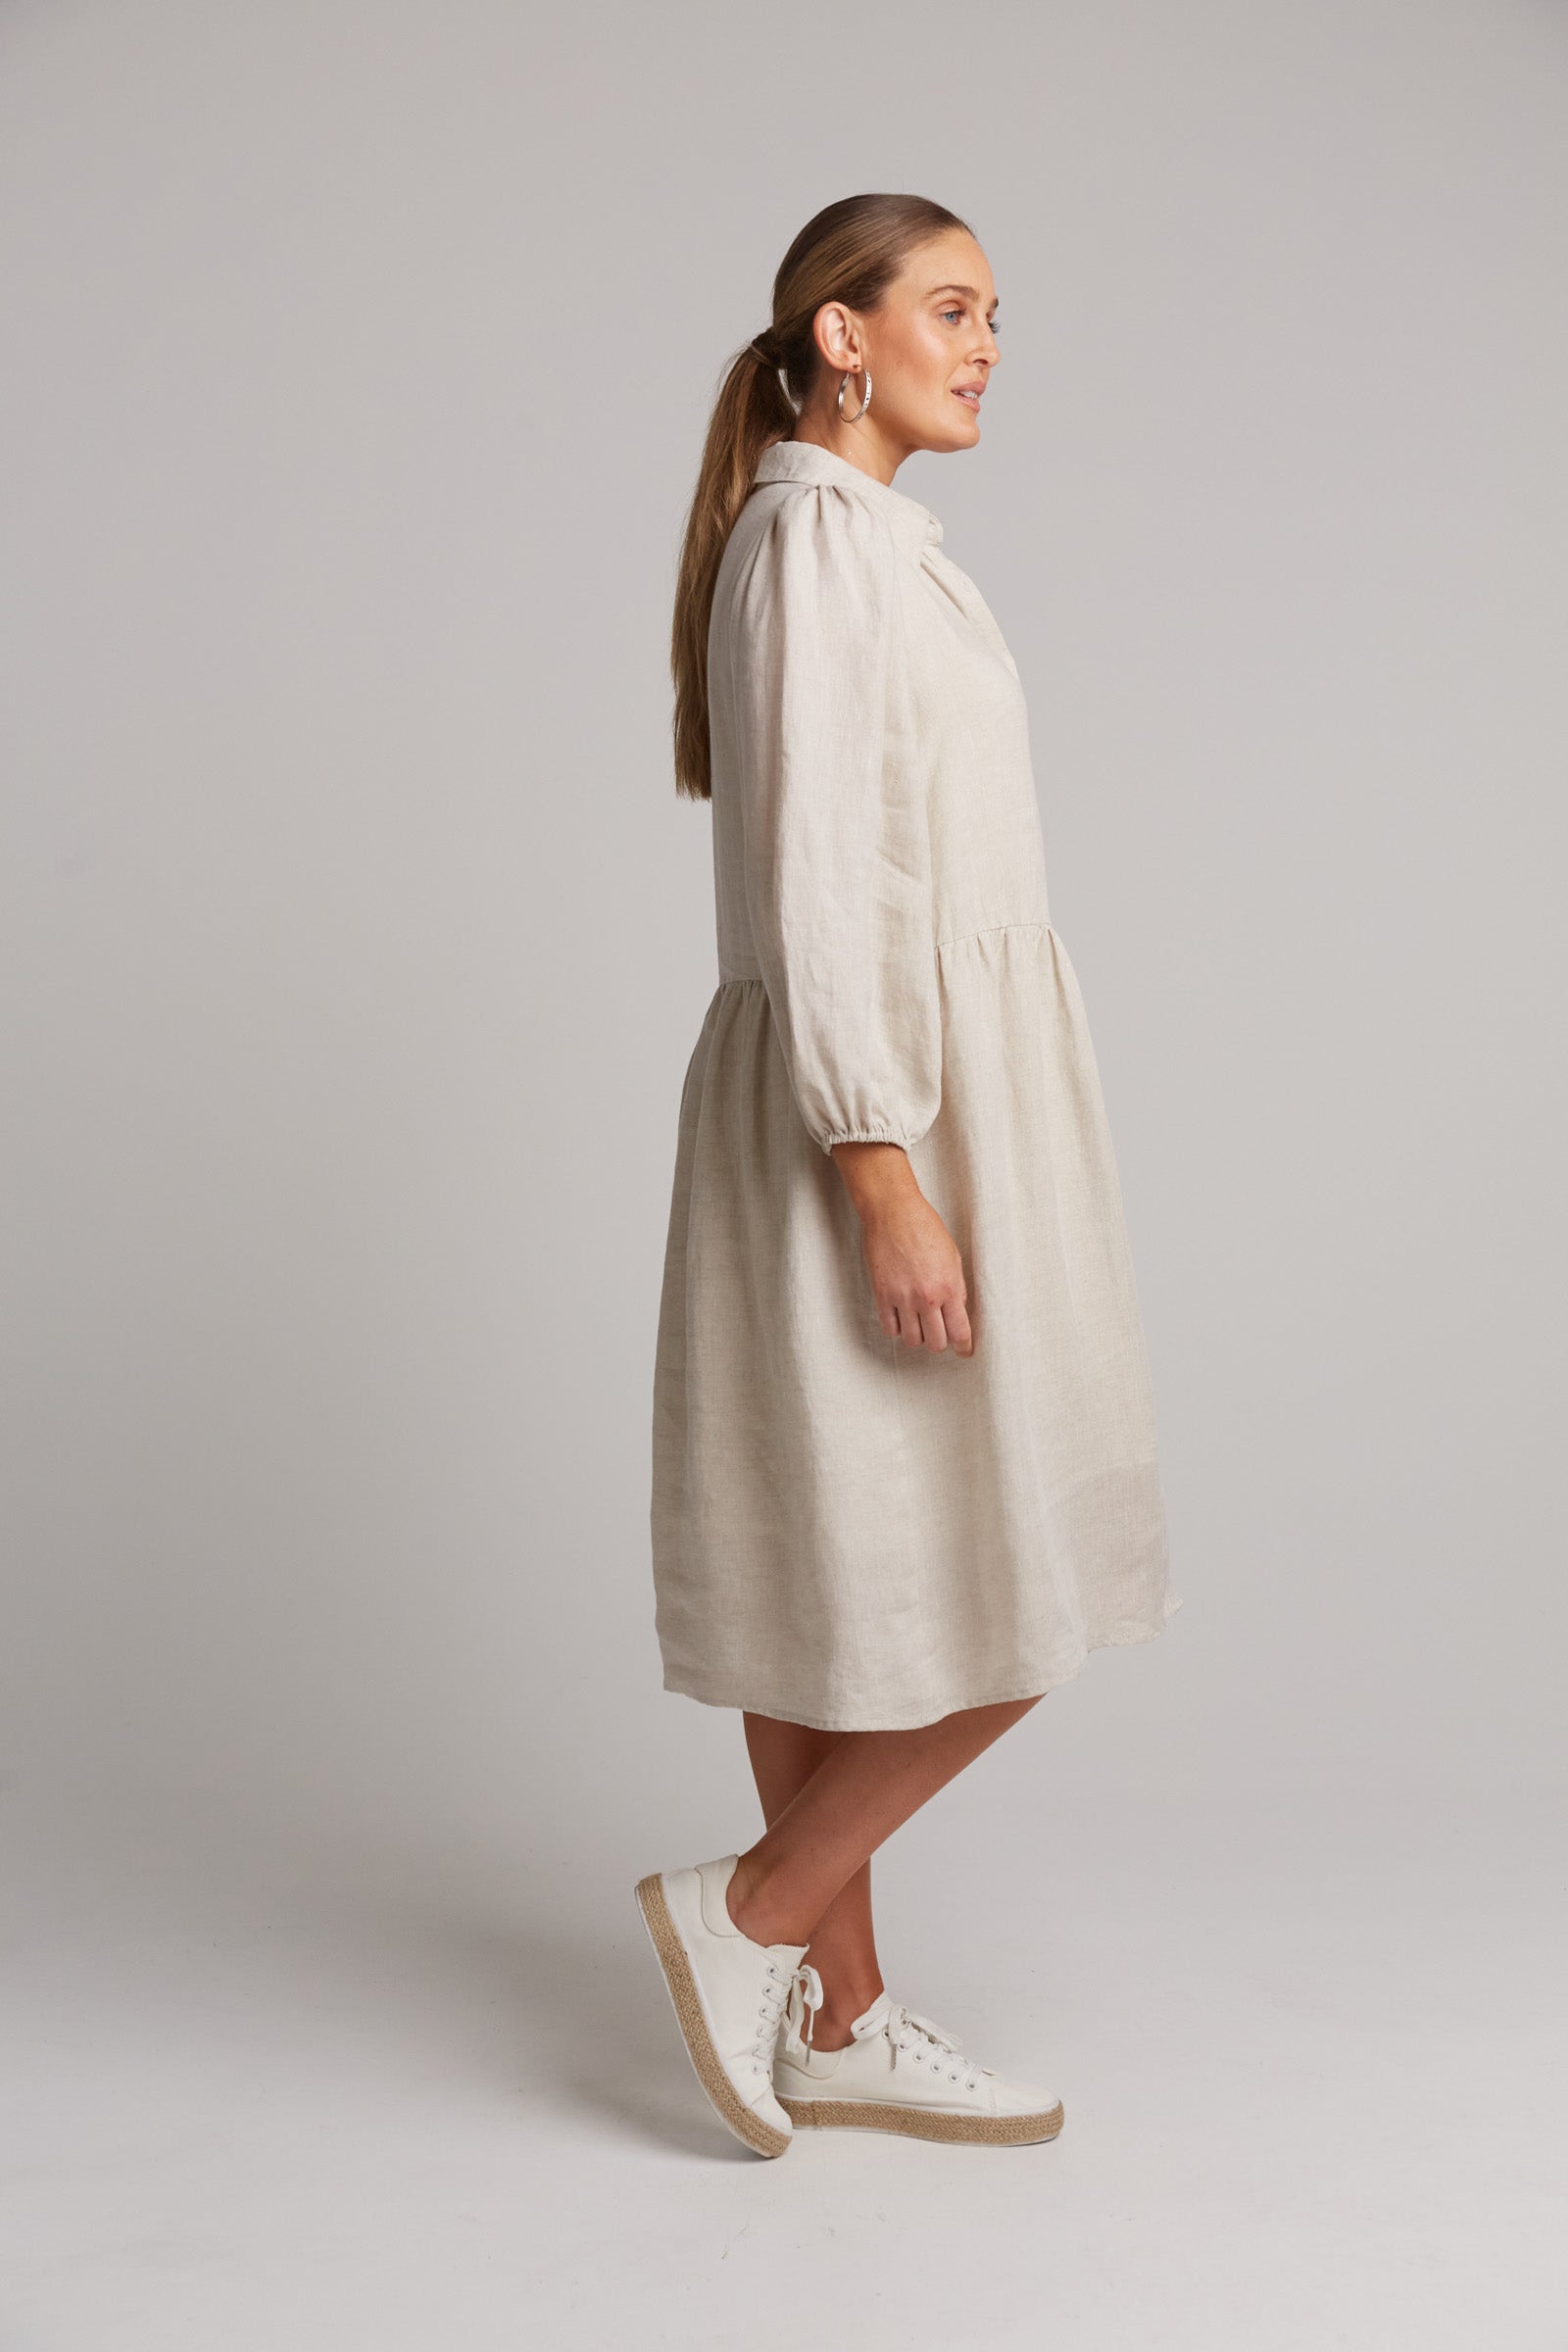 Studio Midi Shirt Dress - Tusk - eb&ive Clothing - Dress Mid Linen